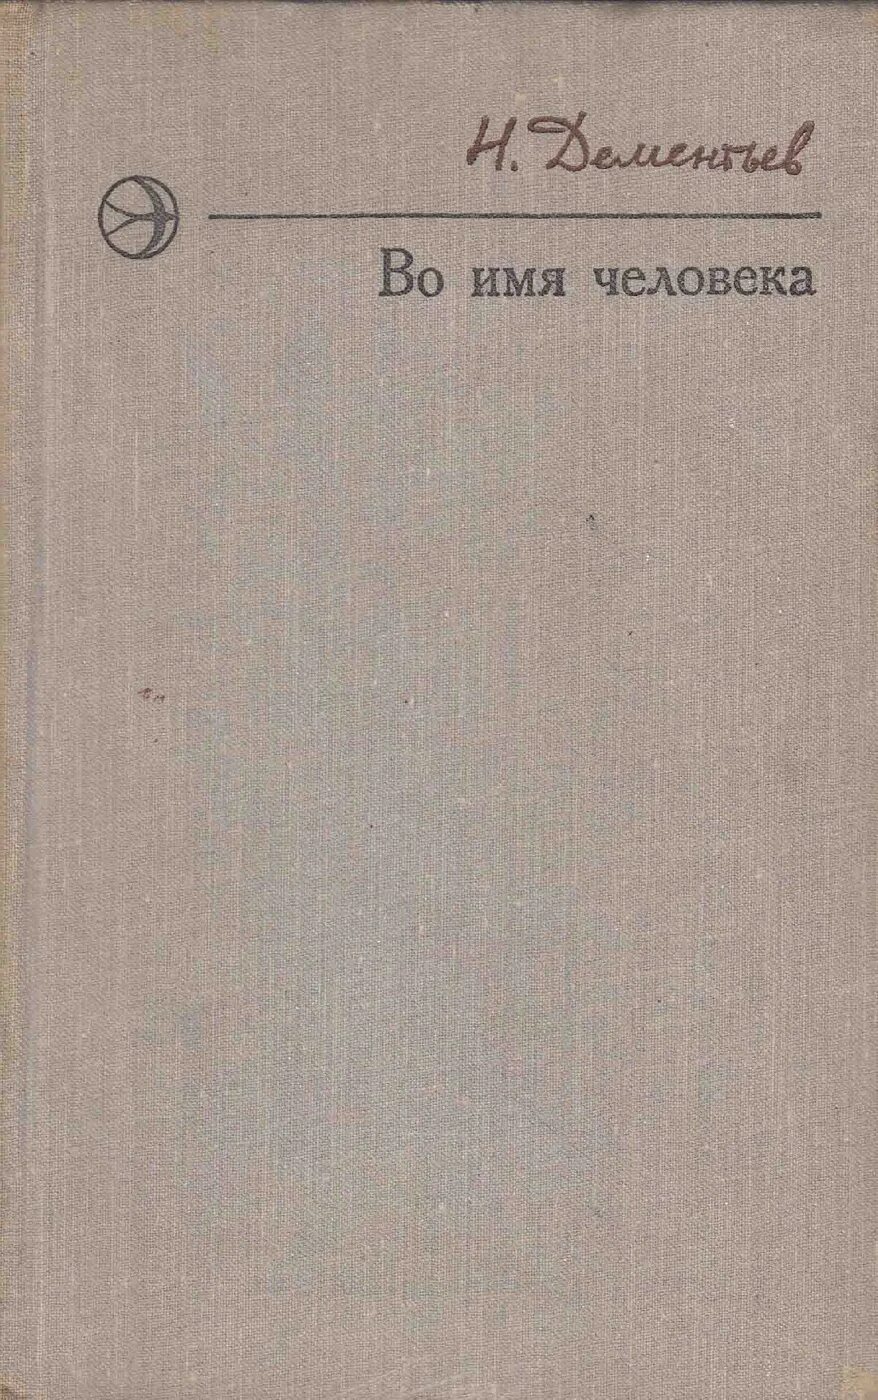 Книги Геннадия Юшкова.